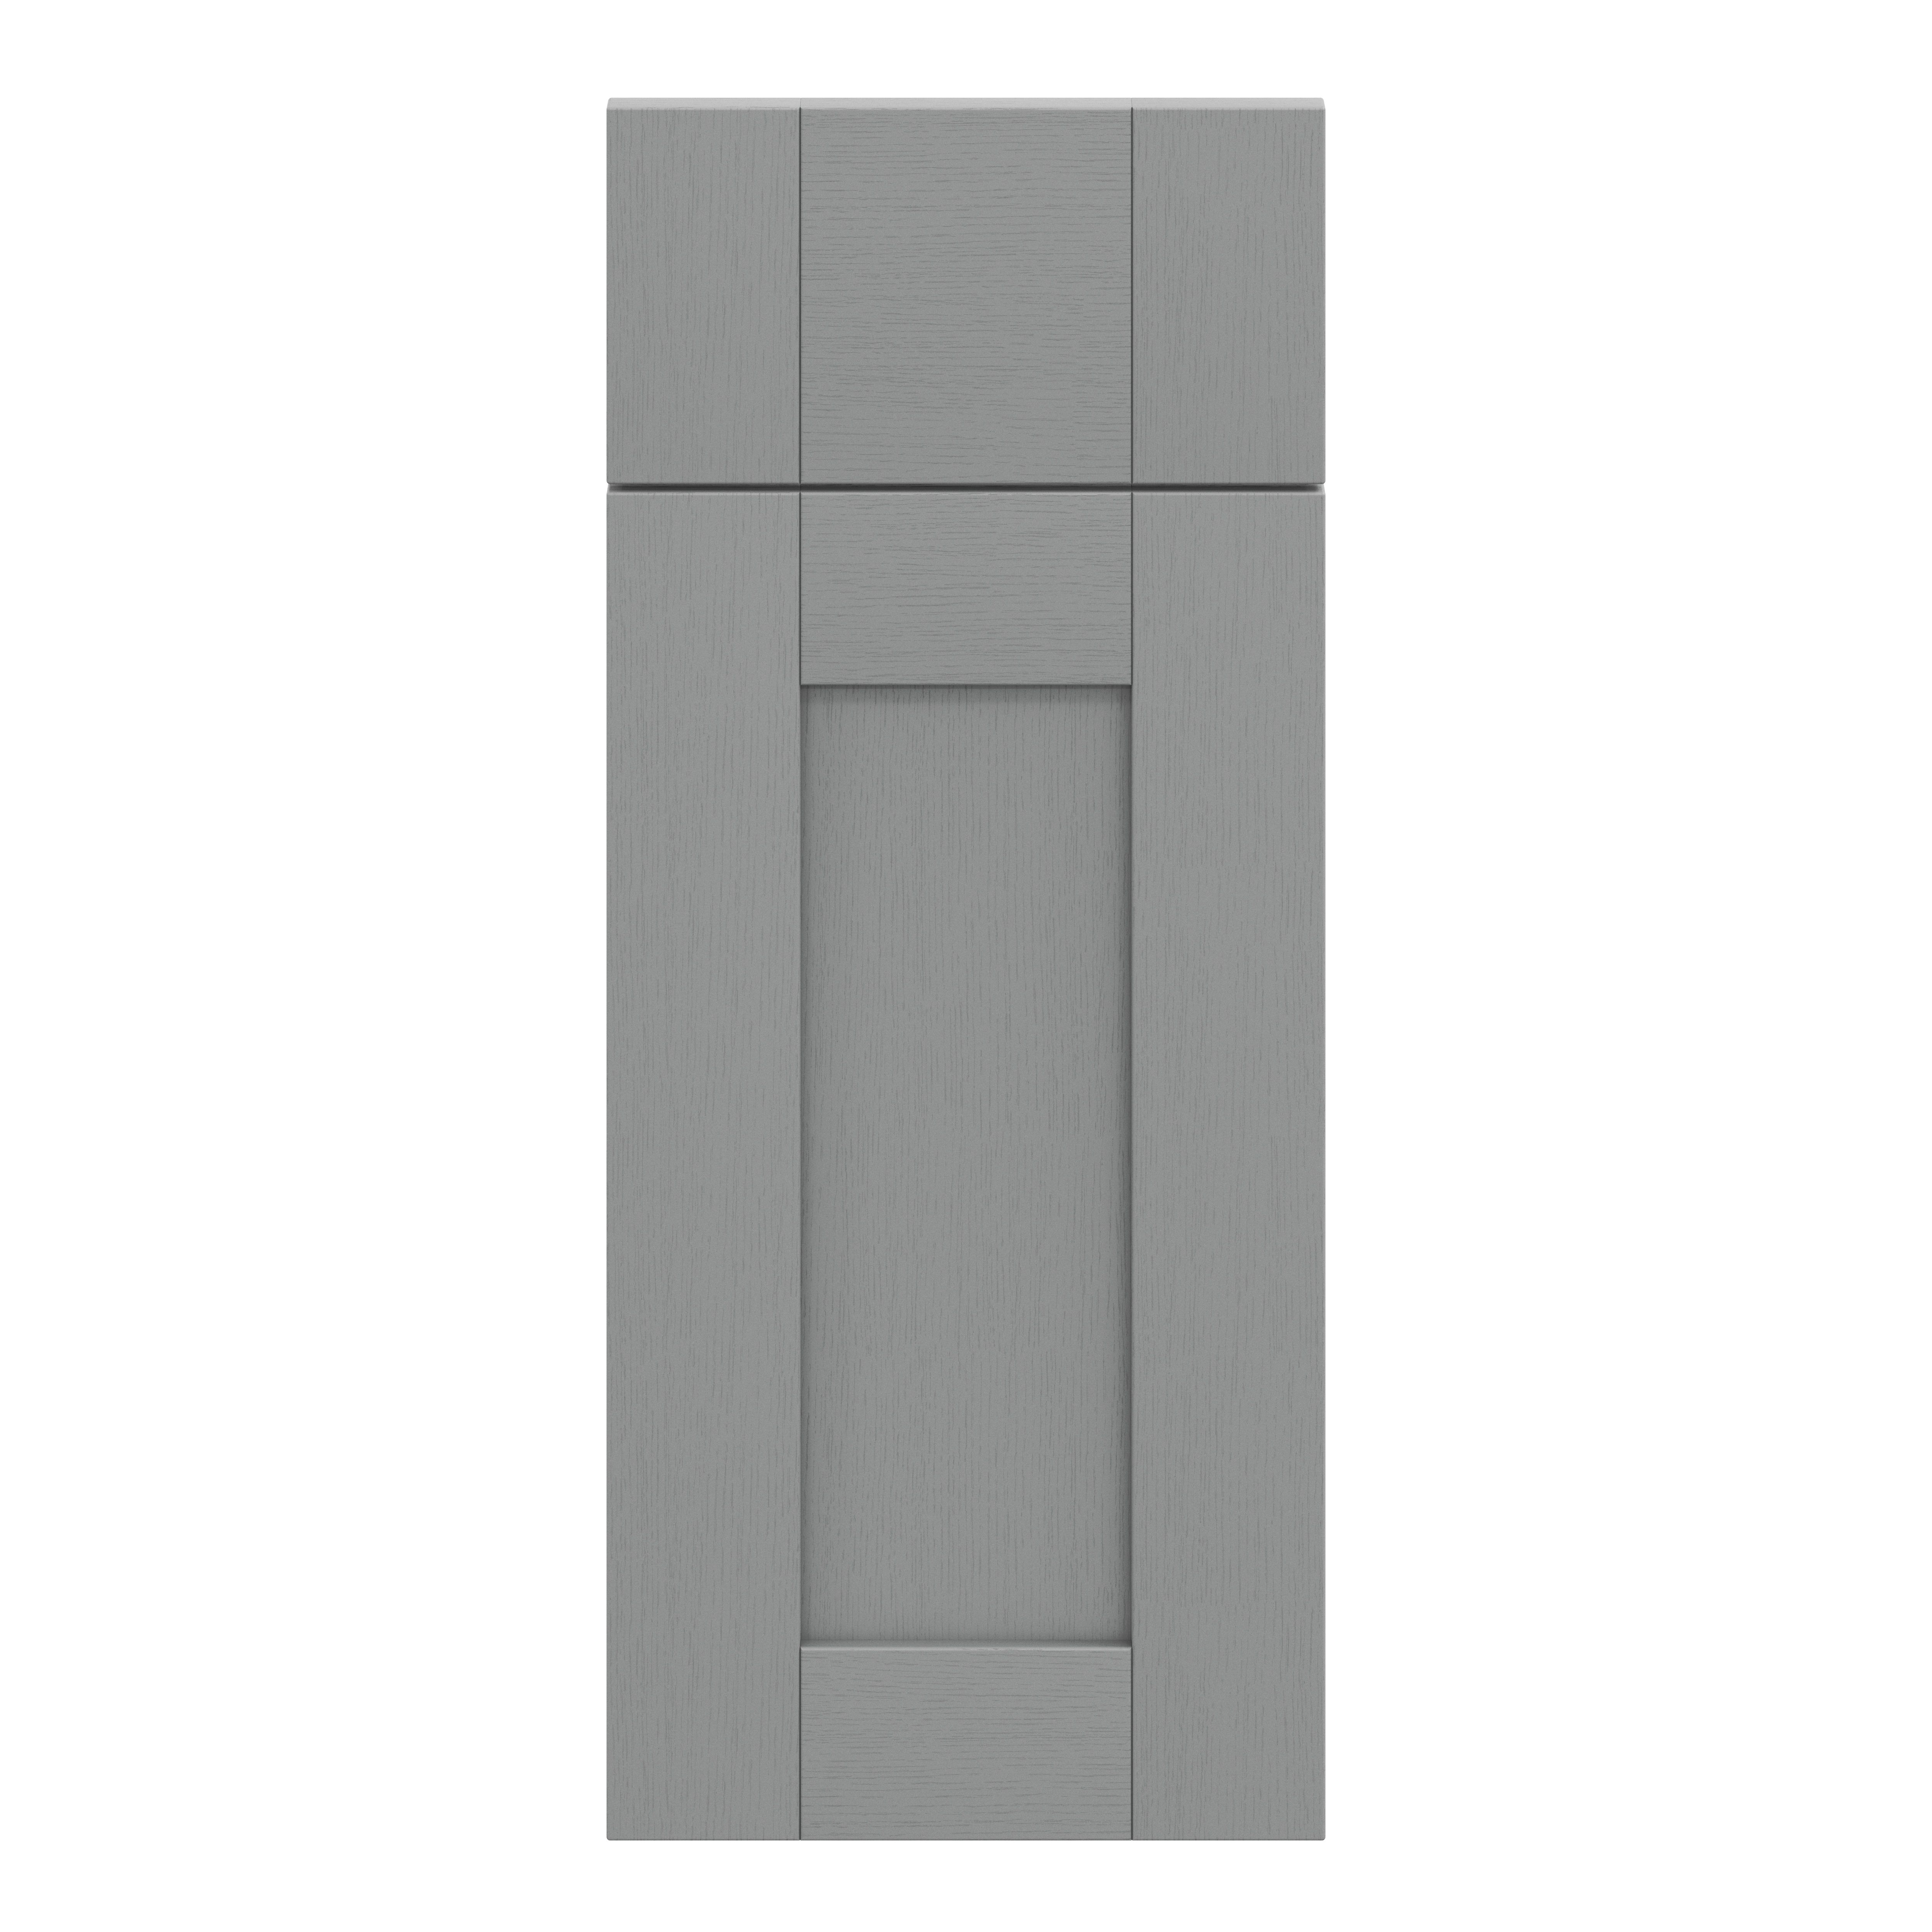 GoodHome Alpinia Matt Slate Grey Painted Wood Effect Shaker Drawerline door & drawer front, (W)300mm (H)715mm (T)18mm